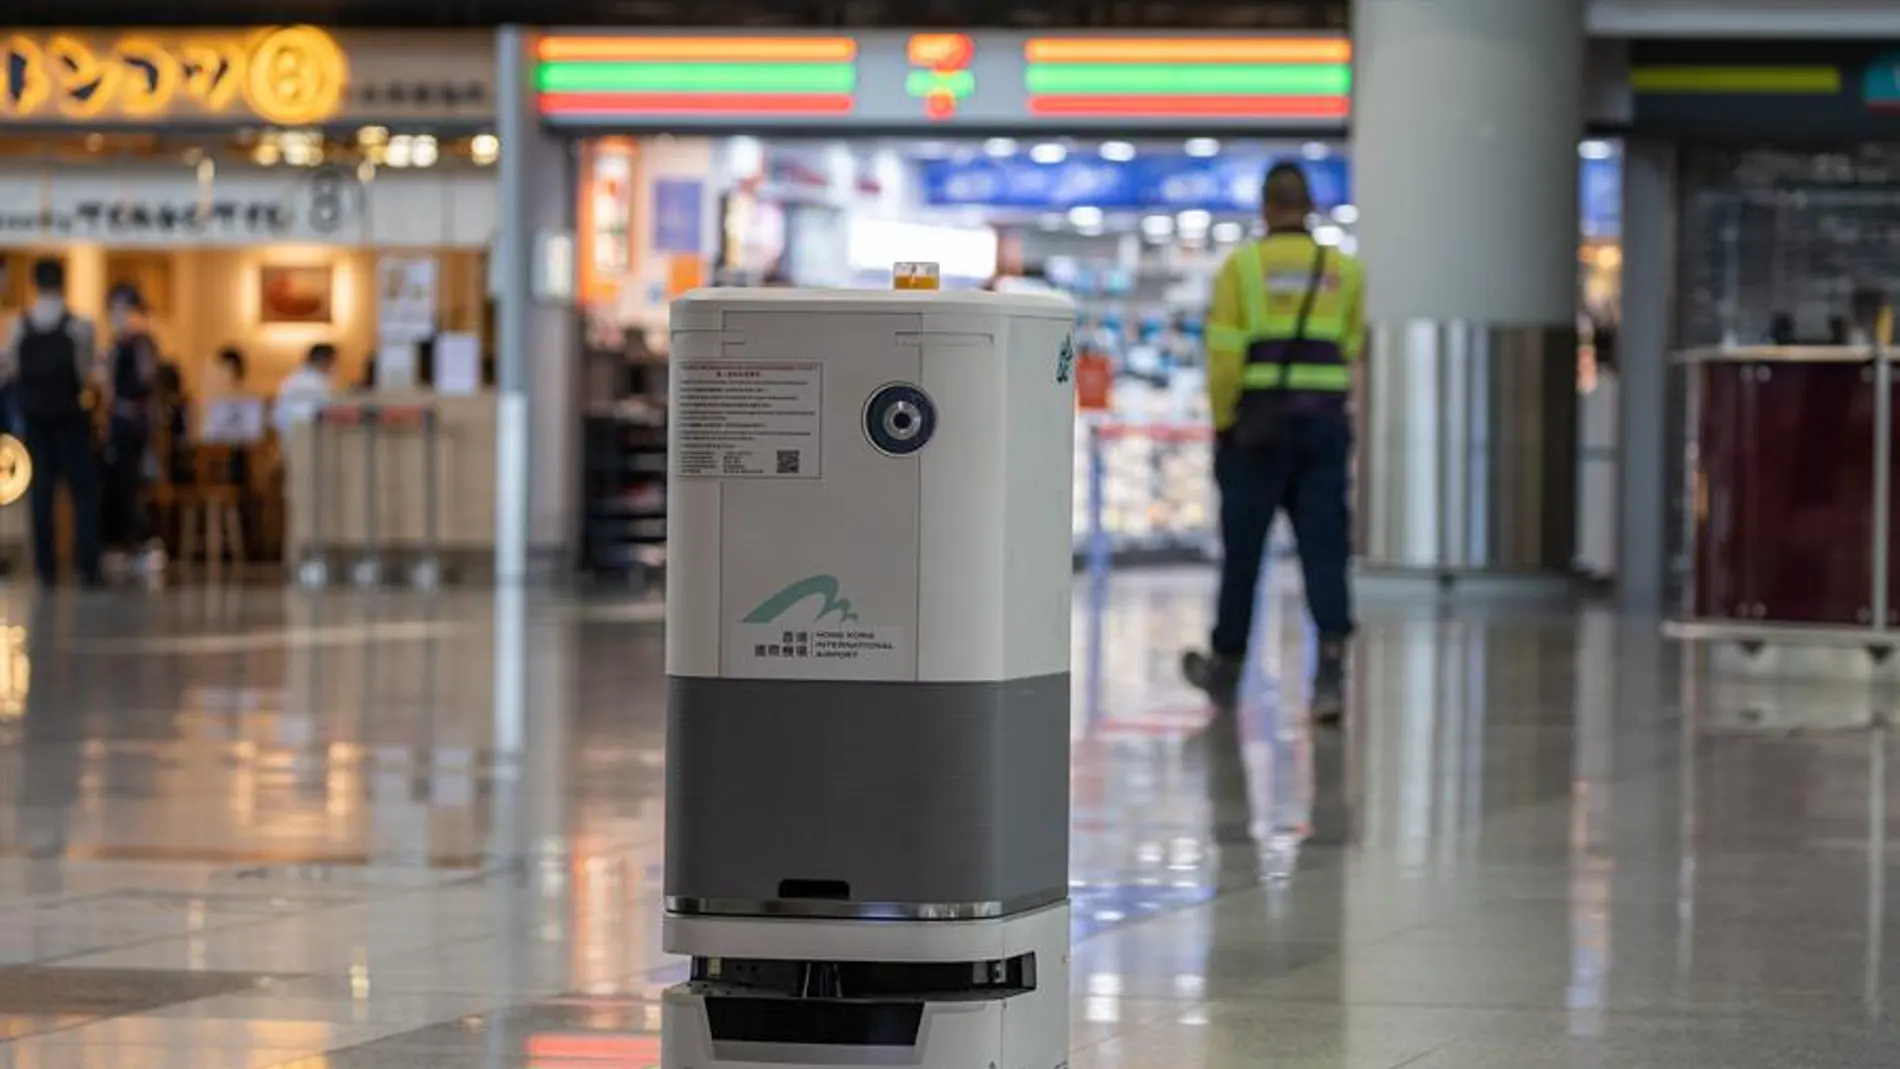 Un robot patrulla en el aeropuerto de Hong Kong